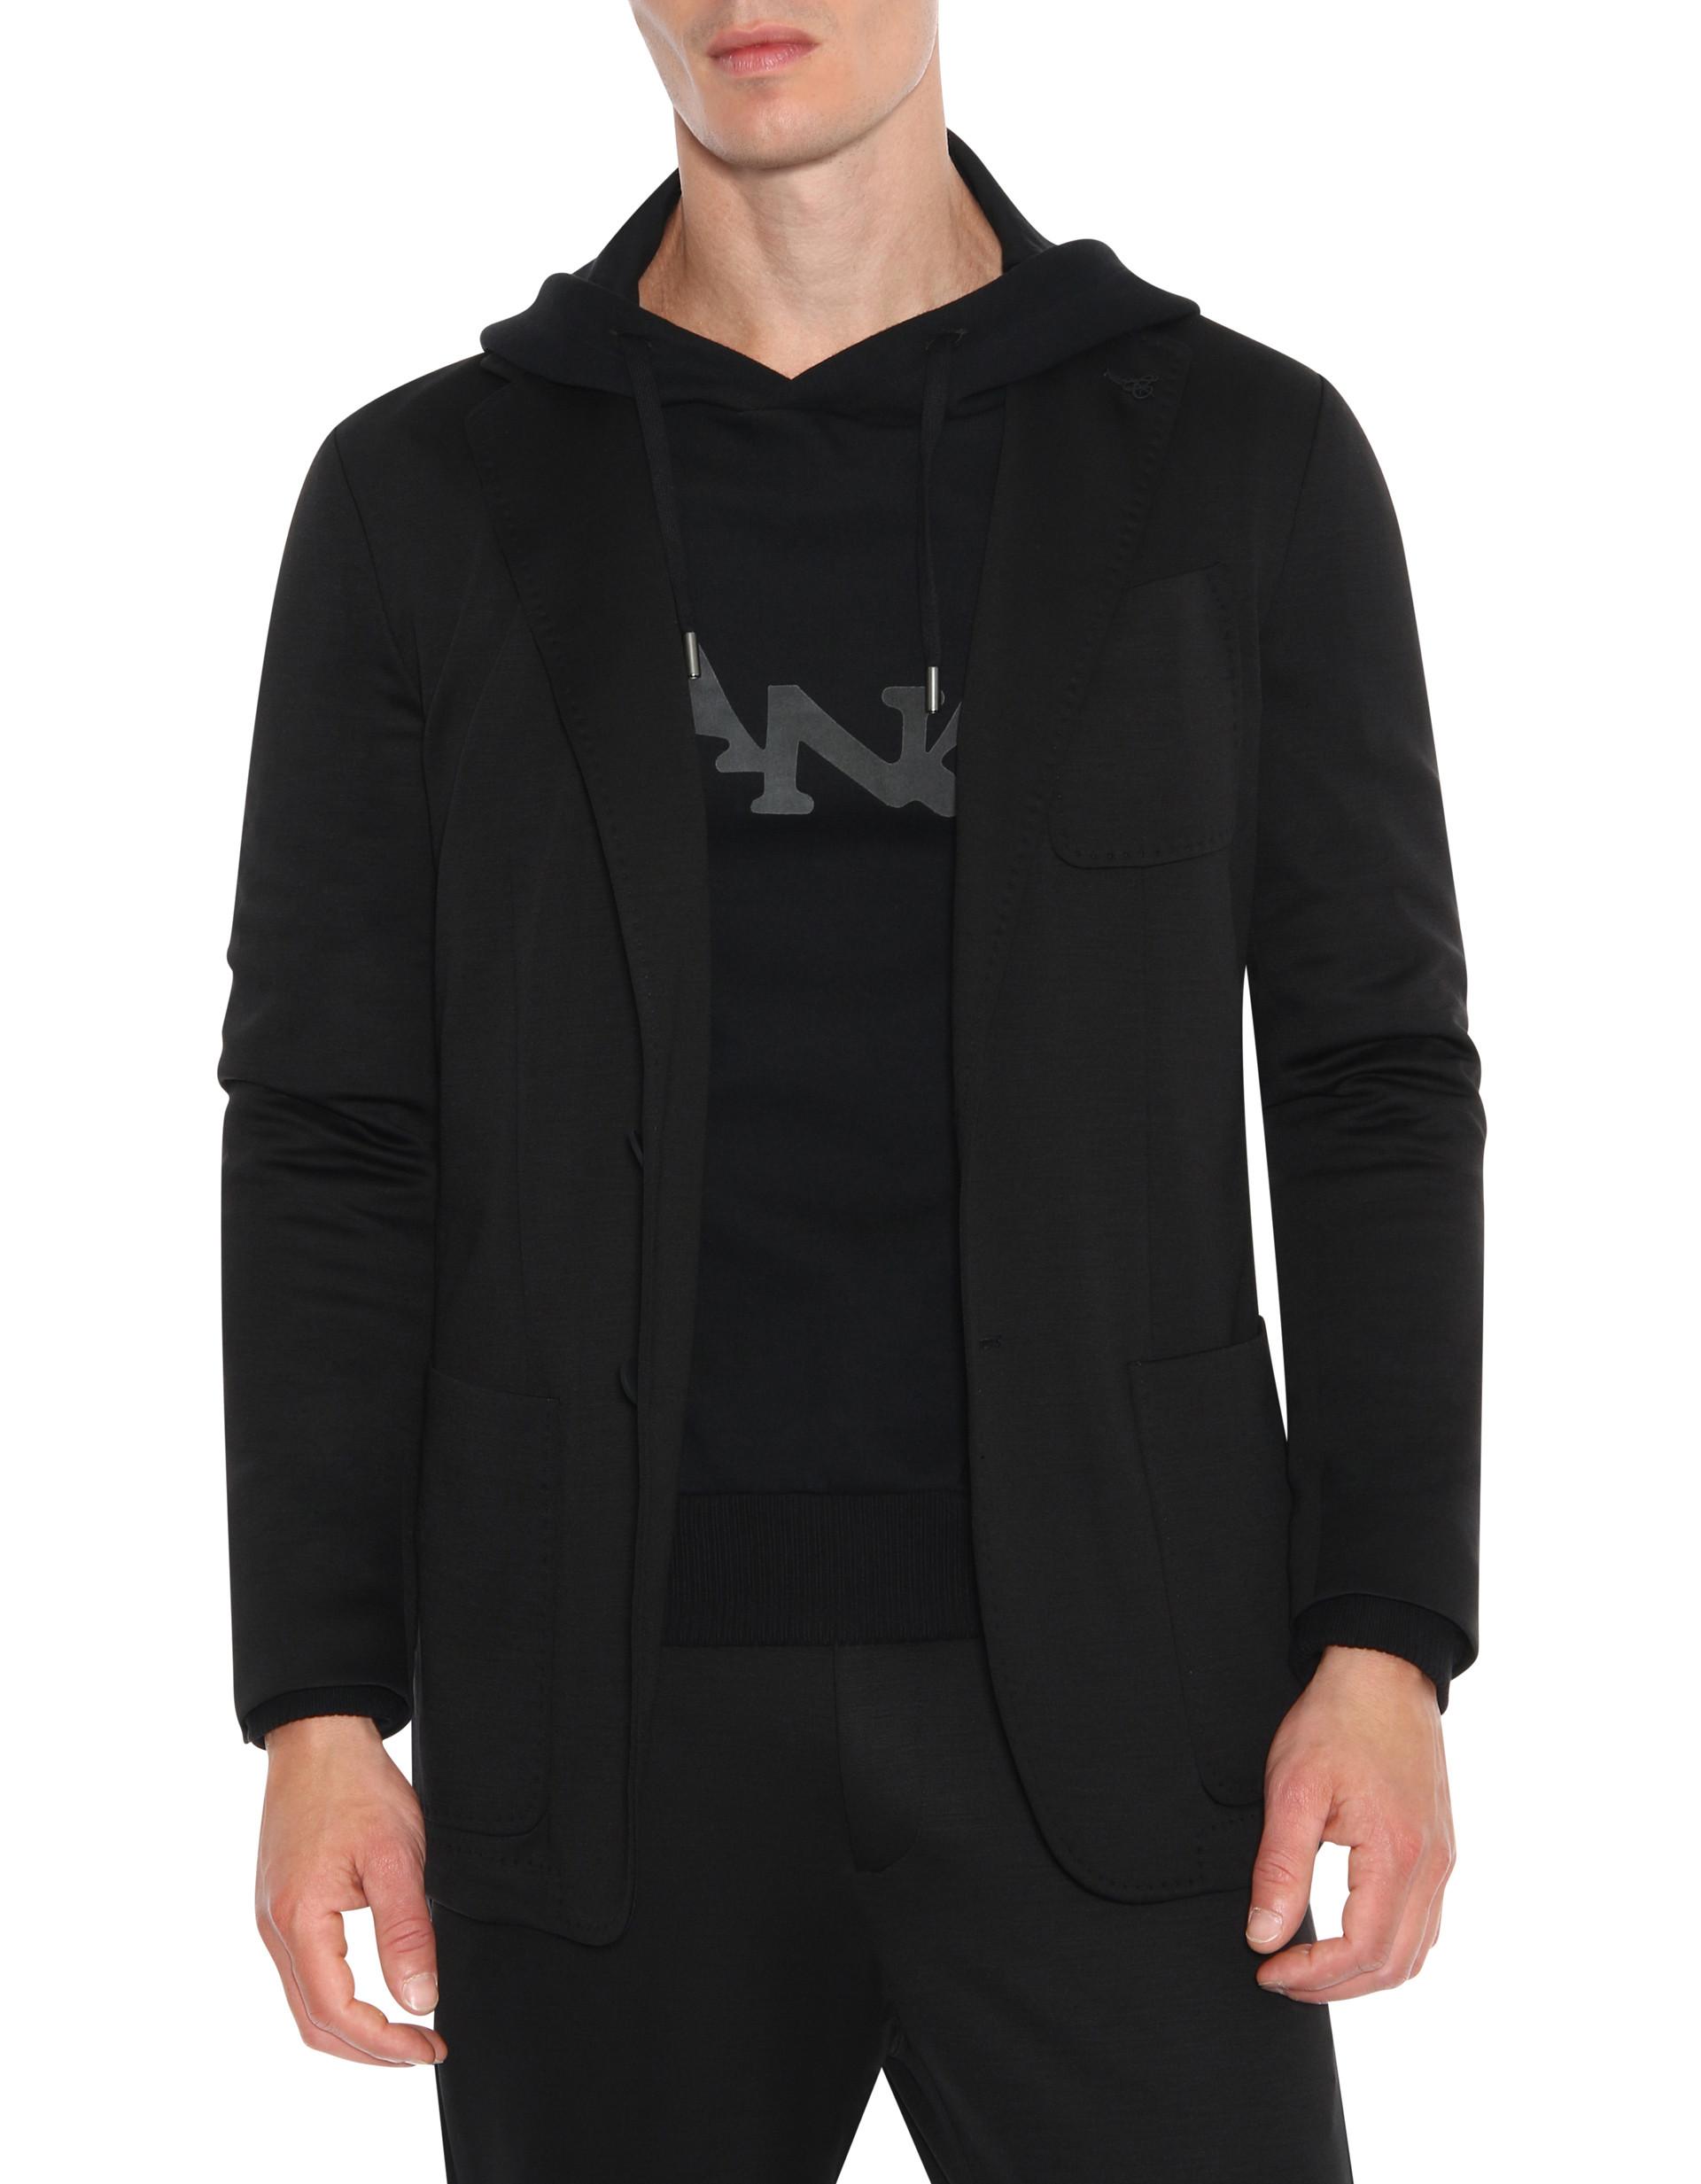 Canali Black Wool Black Edition Jersey Blazer for Men - Lyst